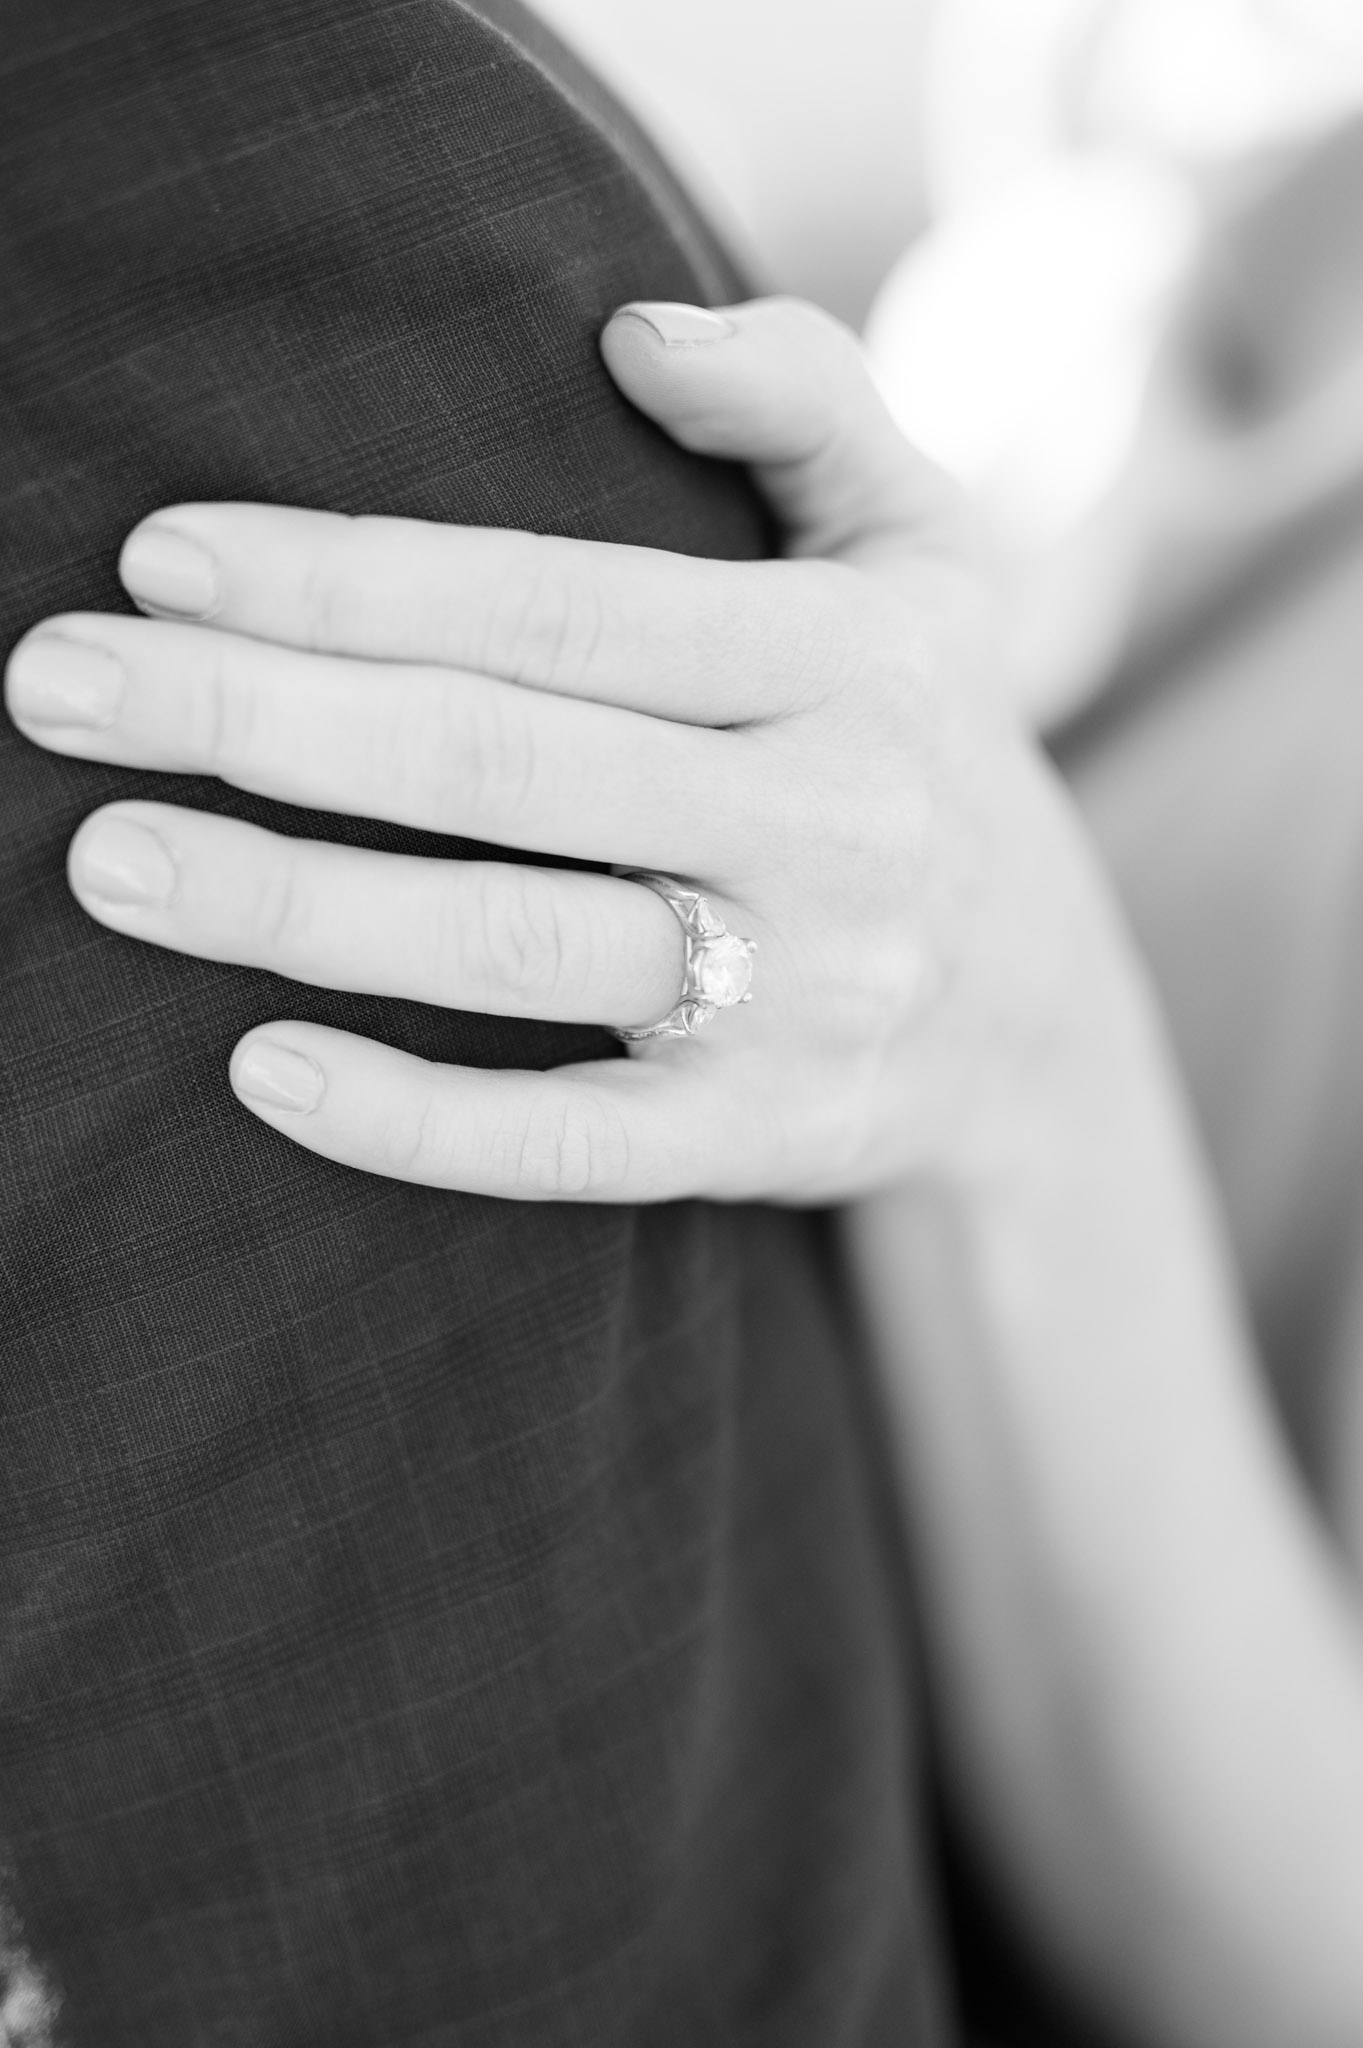 Closeup of engagement ring.